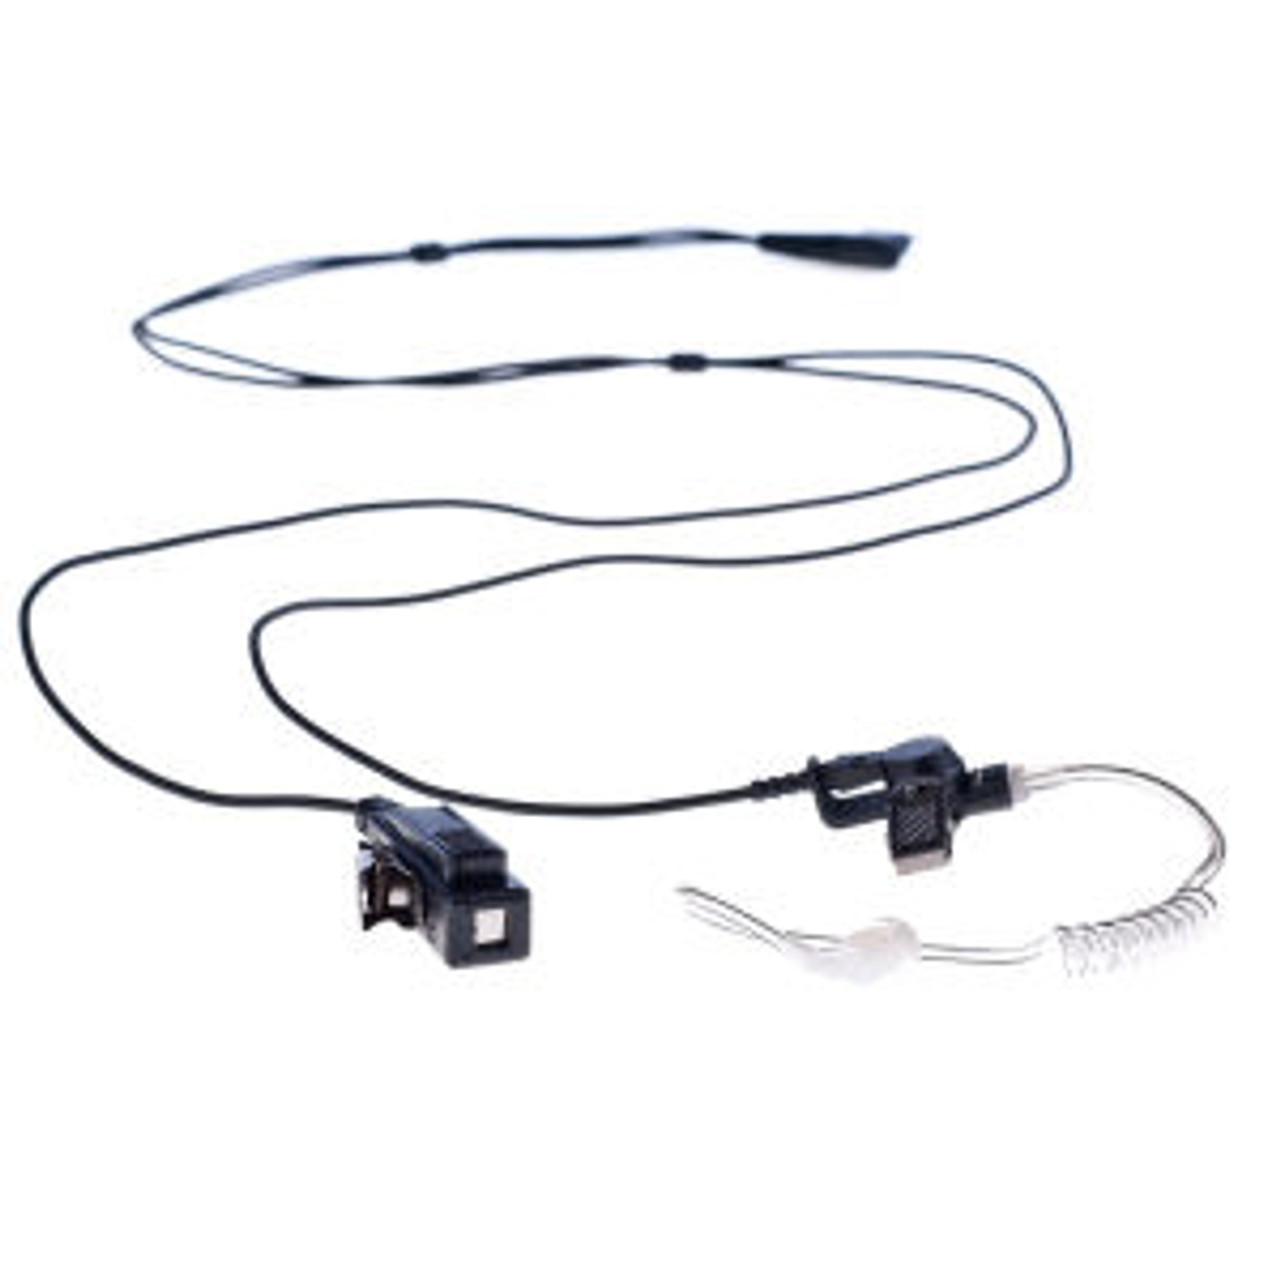 ICOM IC-F51 2-Wire Surveillance Kit